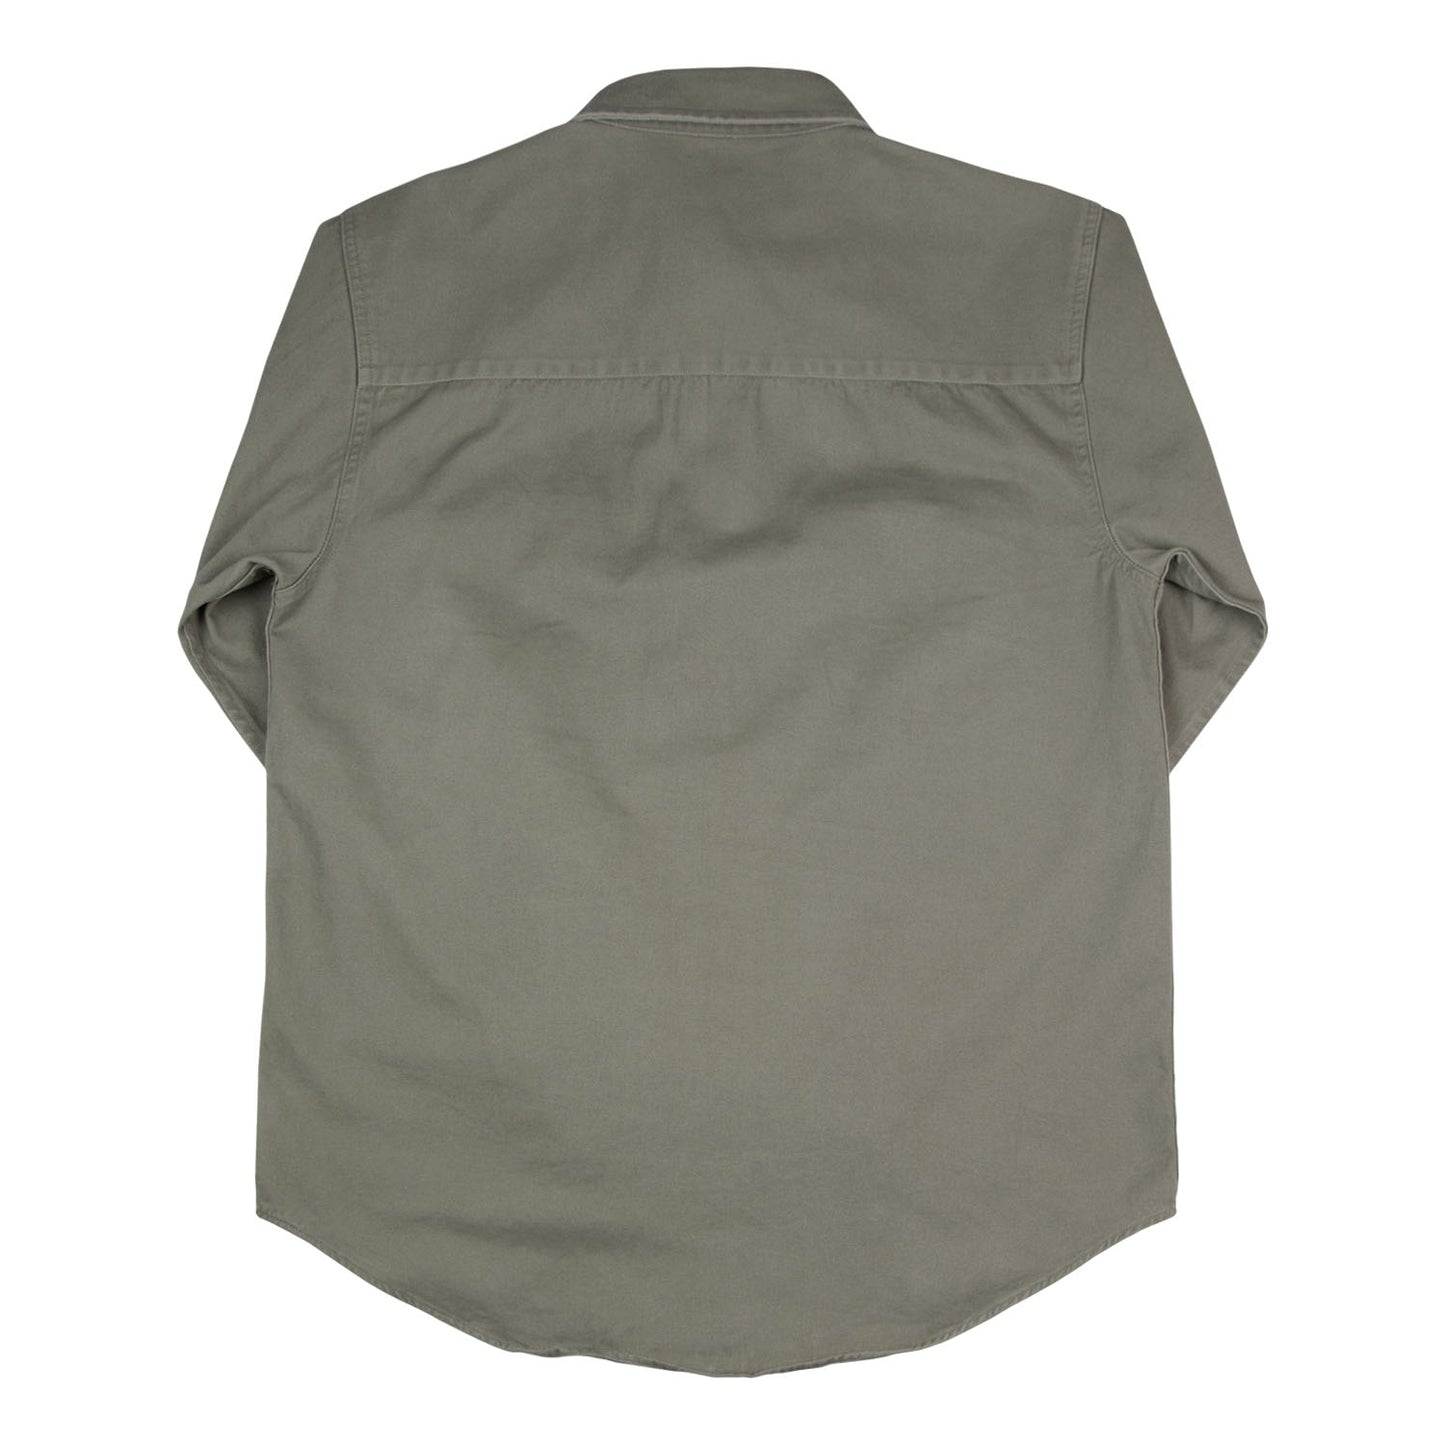 Calenion Drill Overshirt (Khaki)